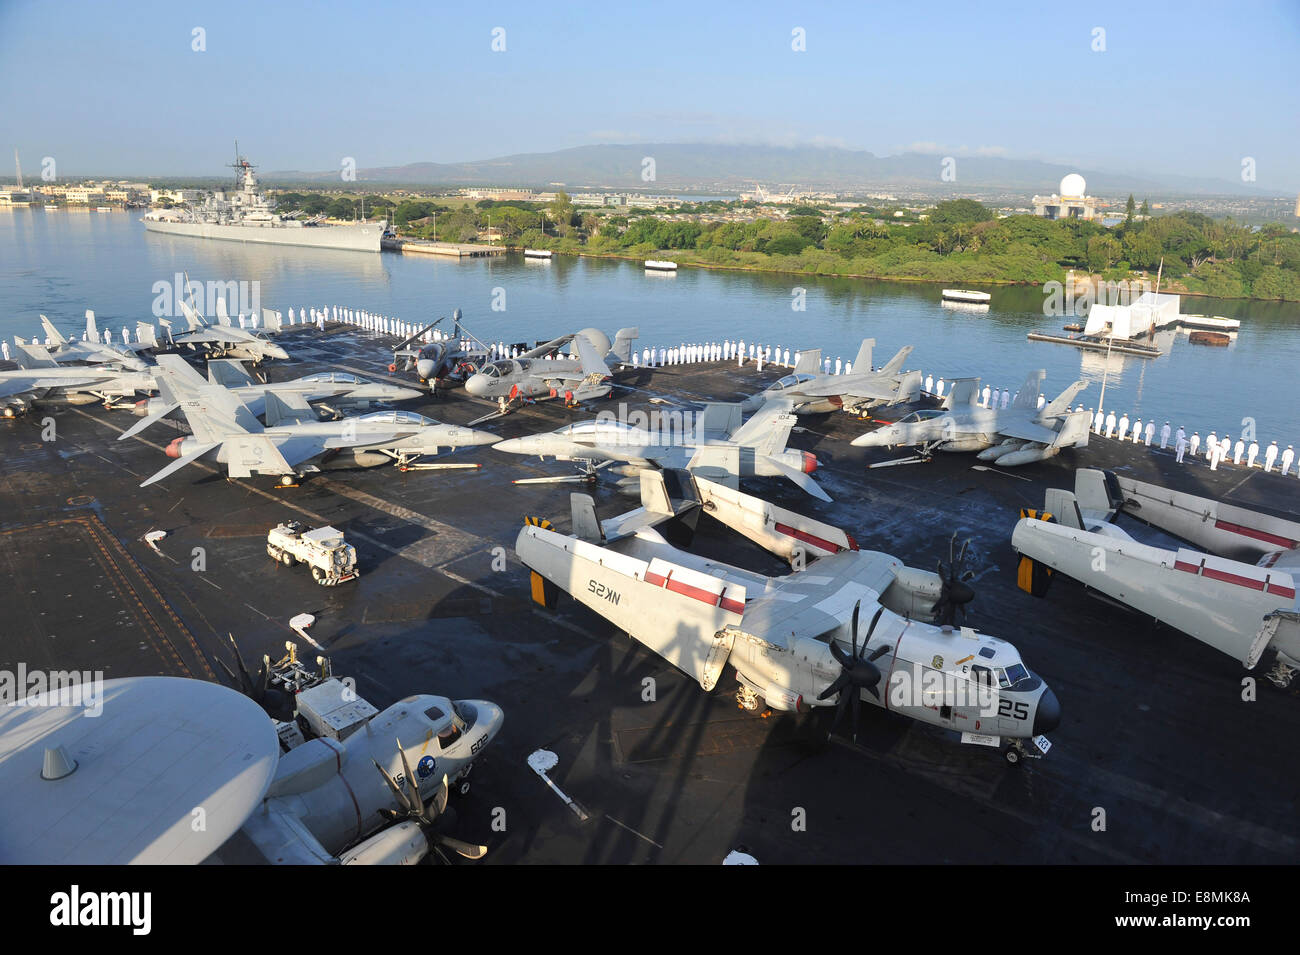 Pearl Harbor, render-3. Dezember 2013 - Segler Ehrungen an Bord des Flugzeugträgers USS Nimitz (CVN-68) das Schiff die Ba ehrt Stockfoto